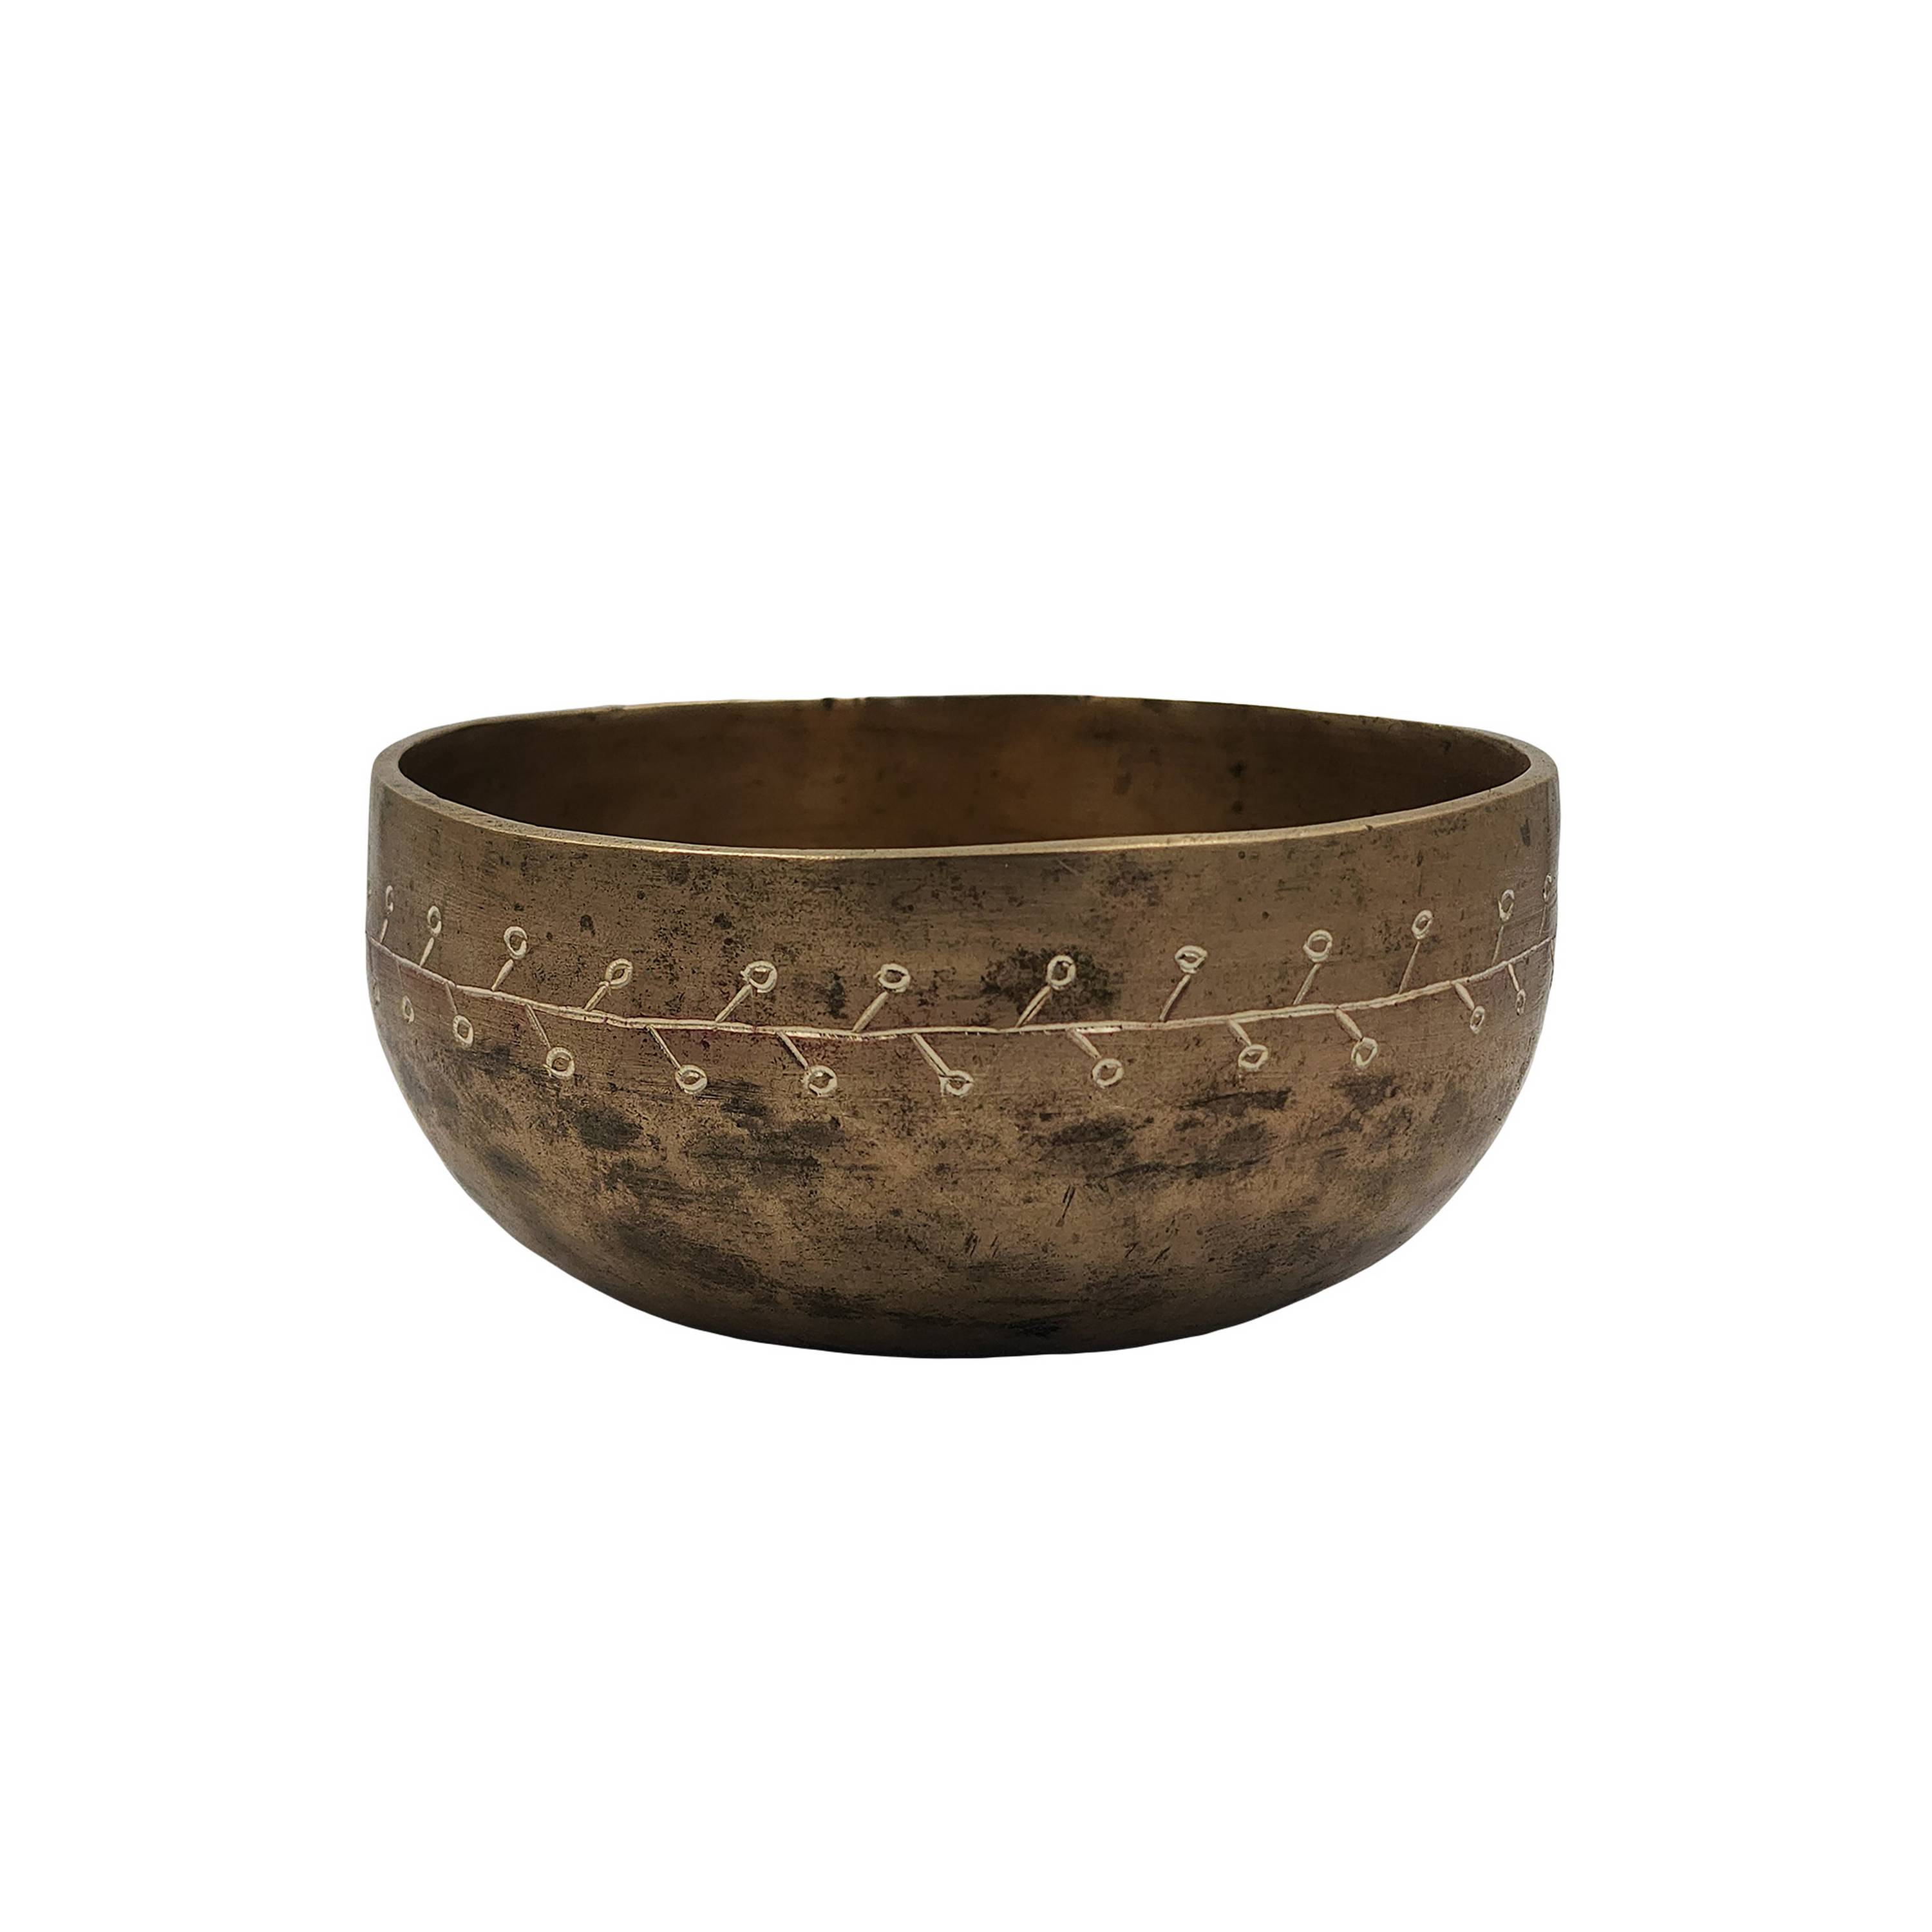 Singing Bowl Thadobati, Buddhist Hand Beaten Bowls, Hand Carved, Antique